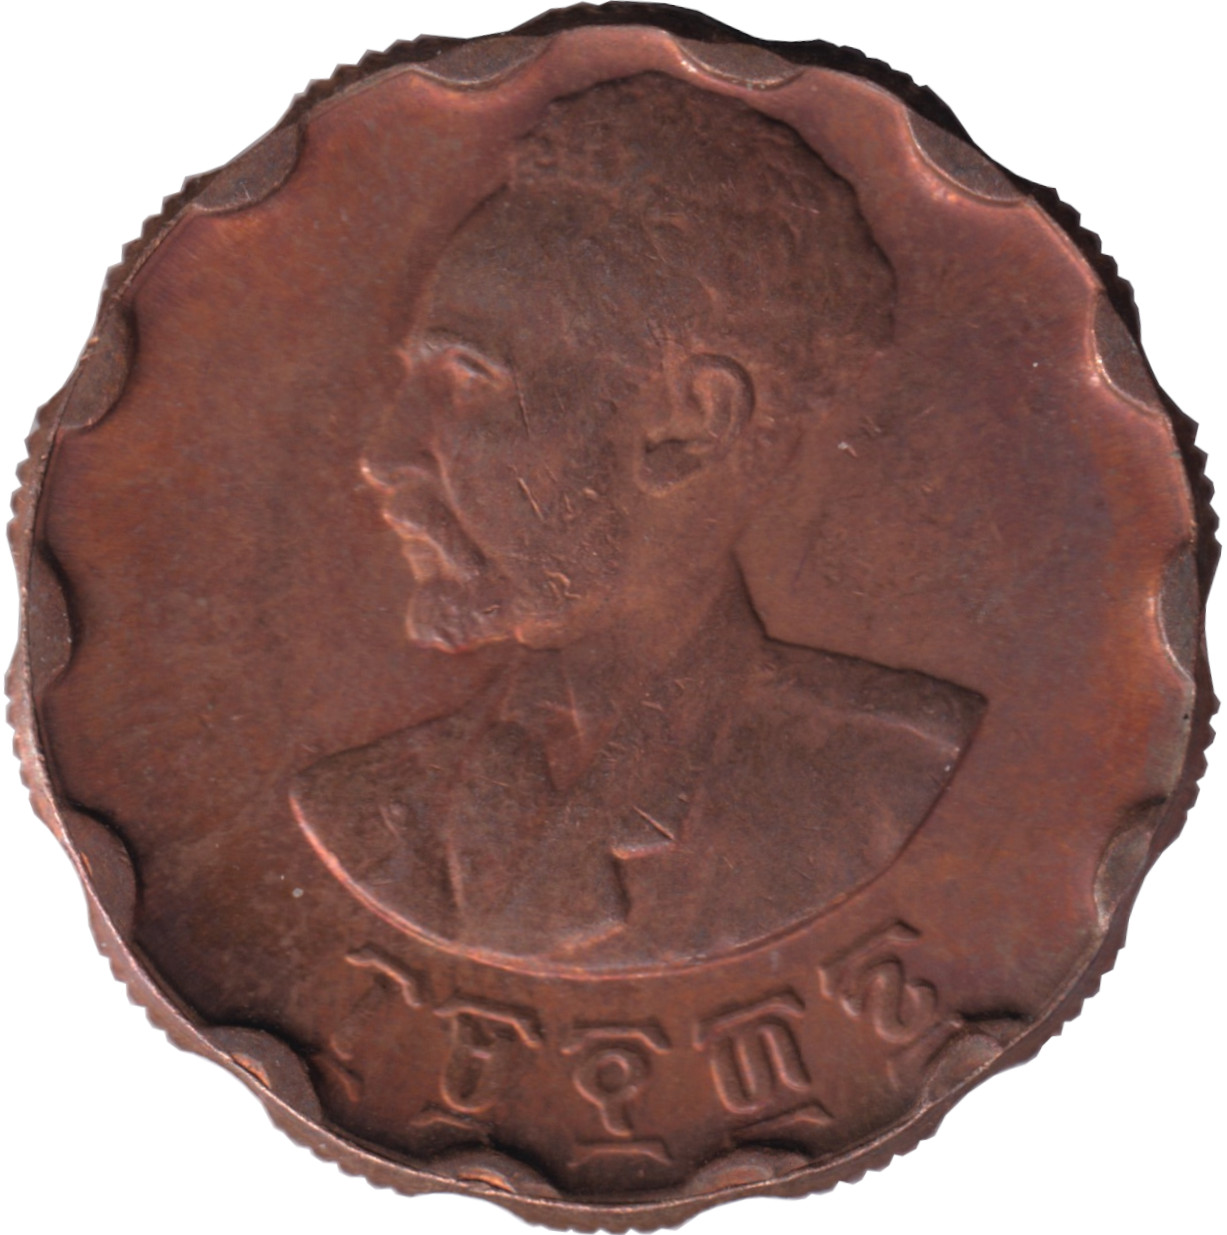 25 cents - Haile Selassie I - Tranche cannelée